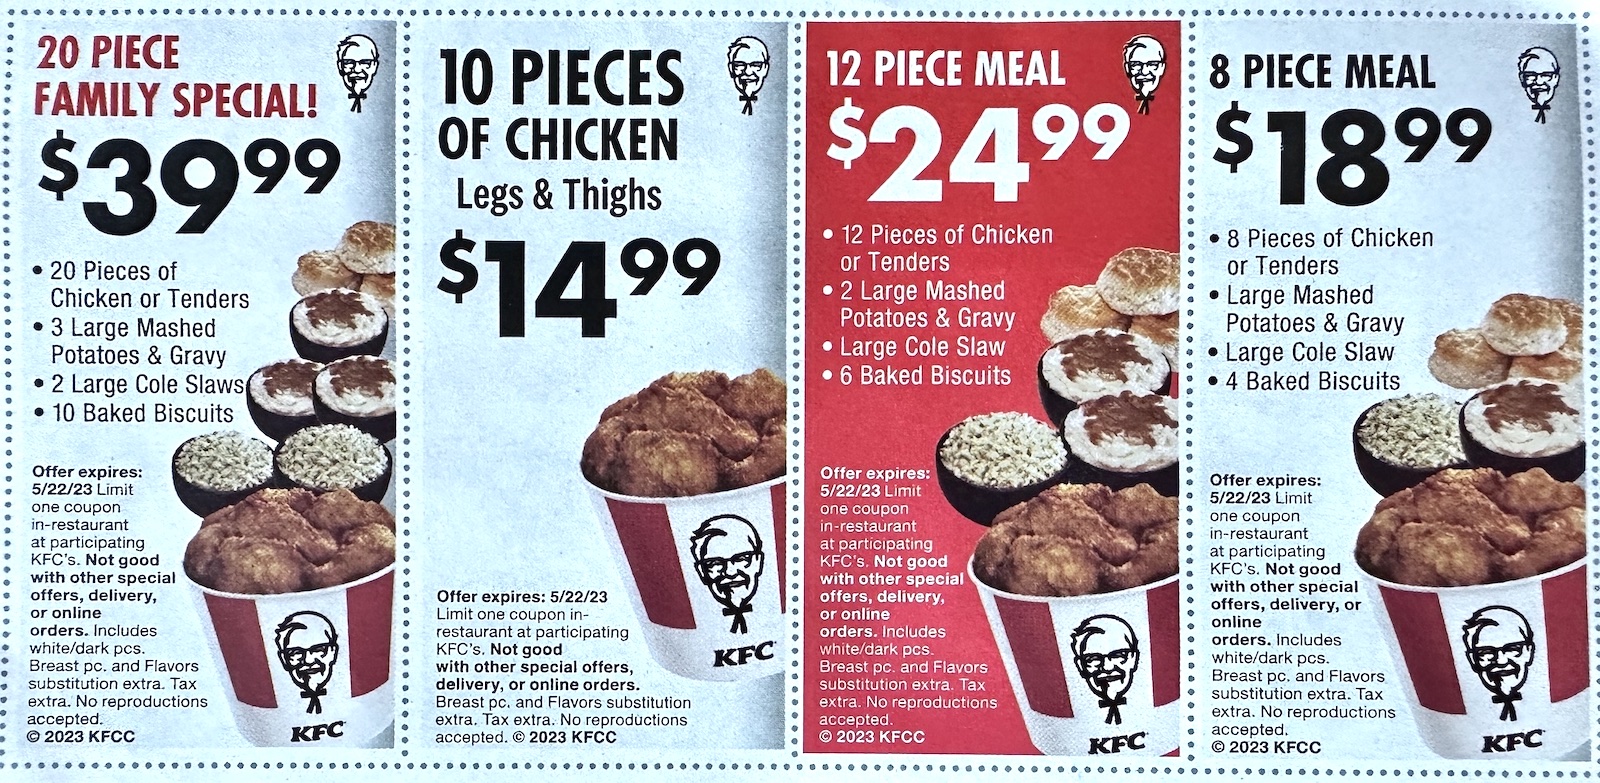 KFC Kentucky Fried Chicken Coupons Deals Expires 5/22/2023